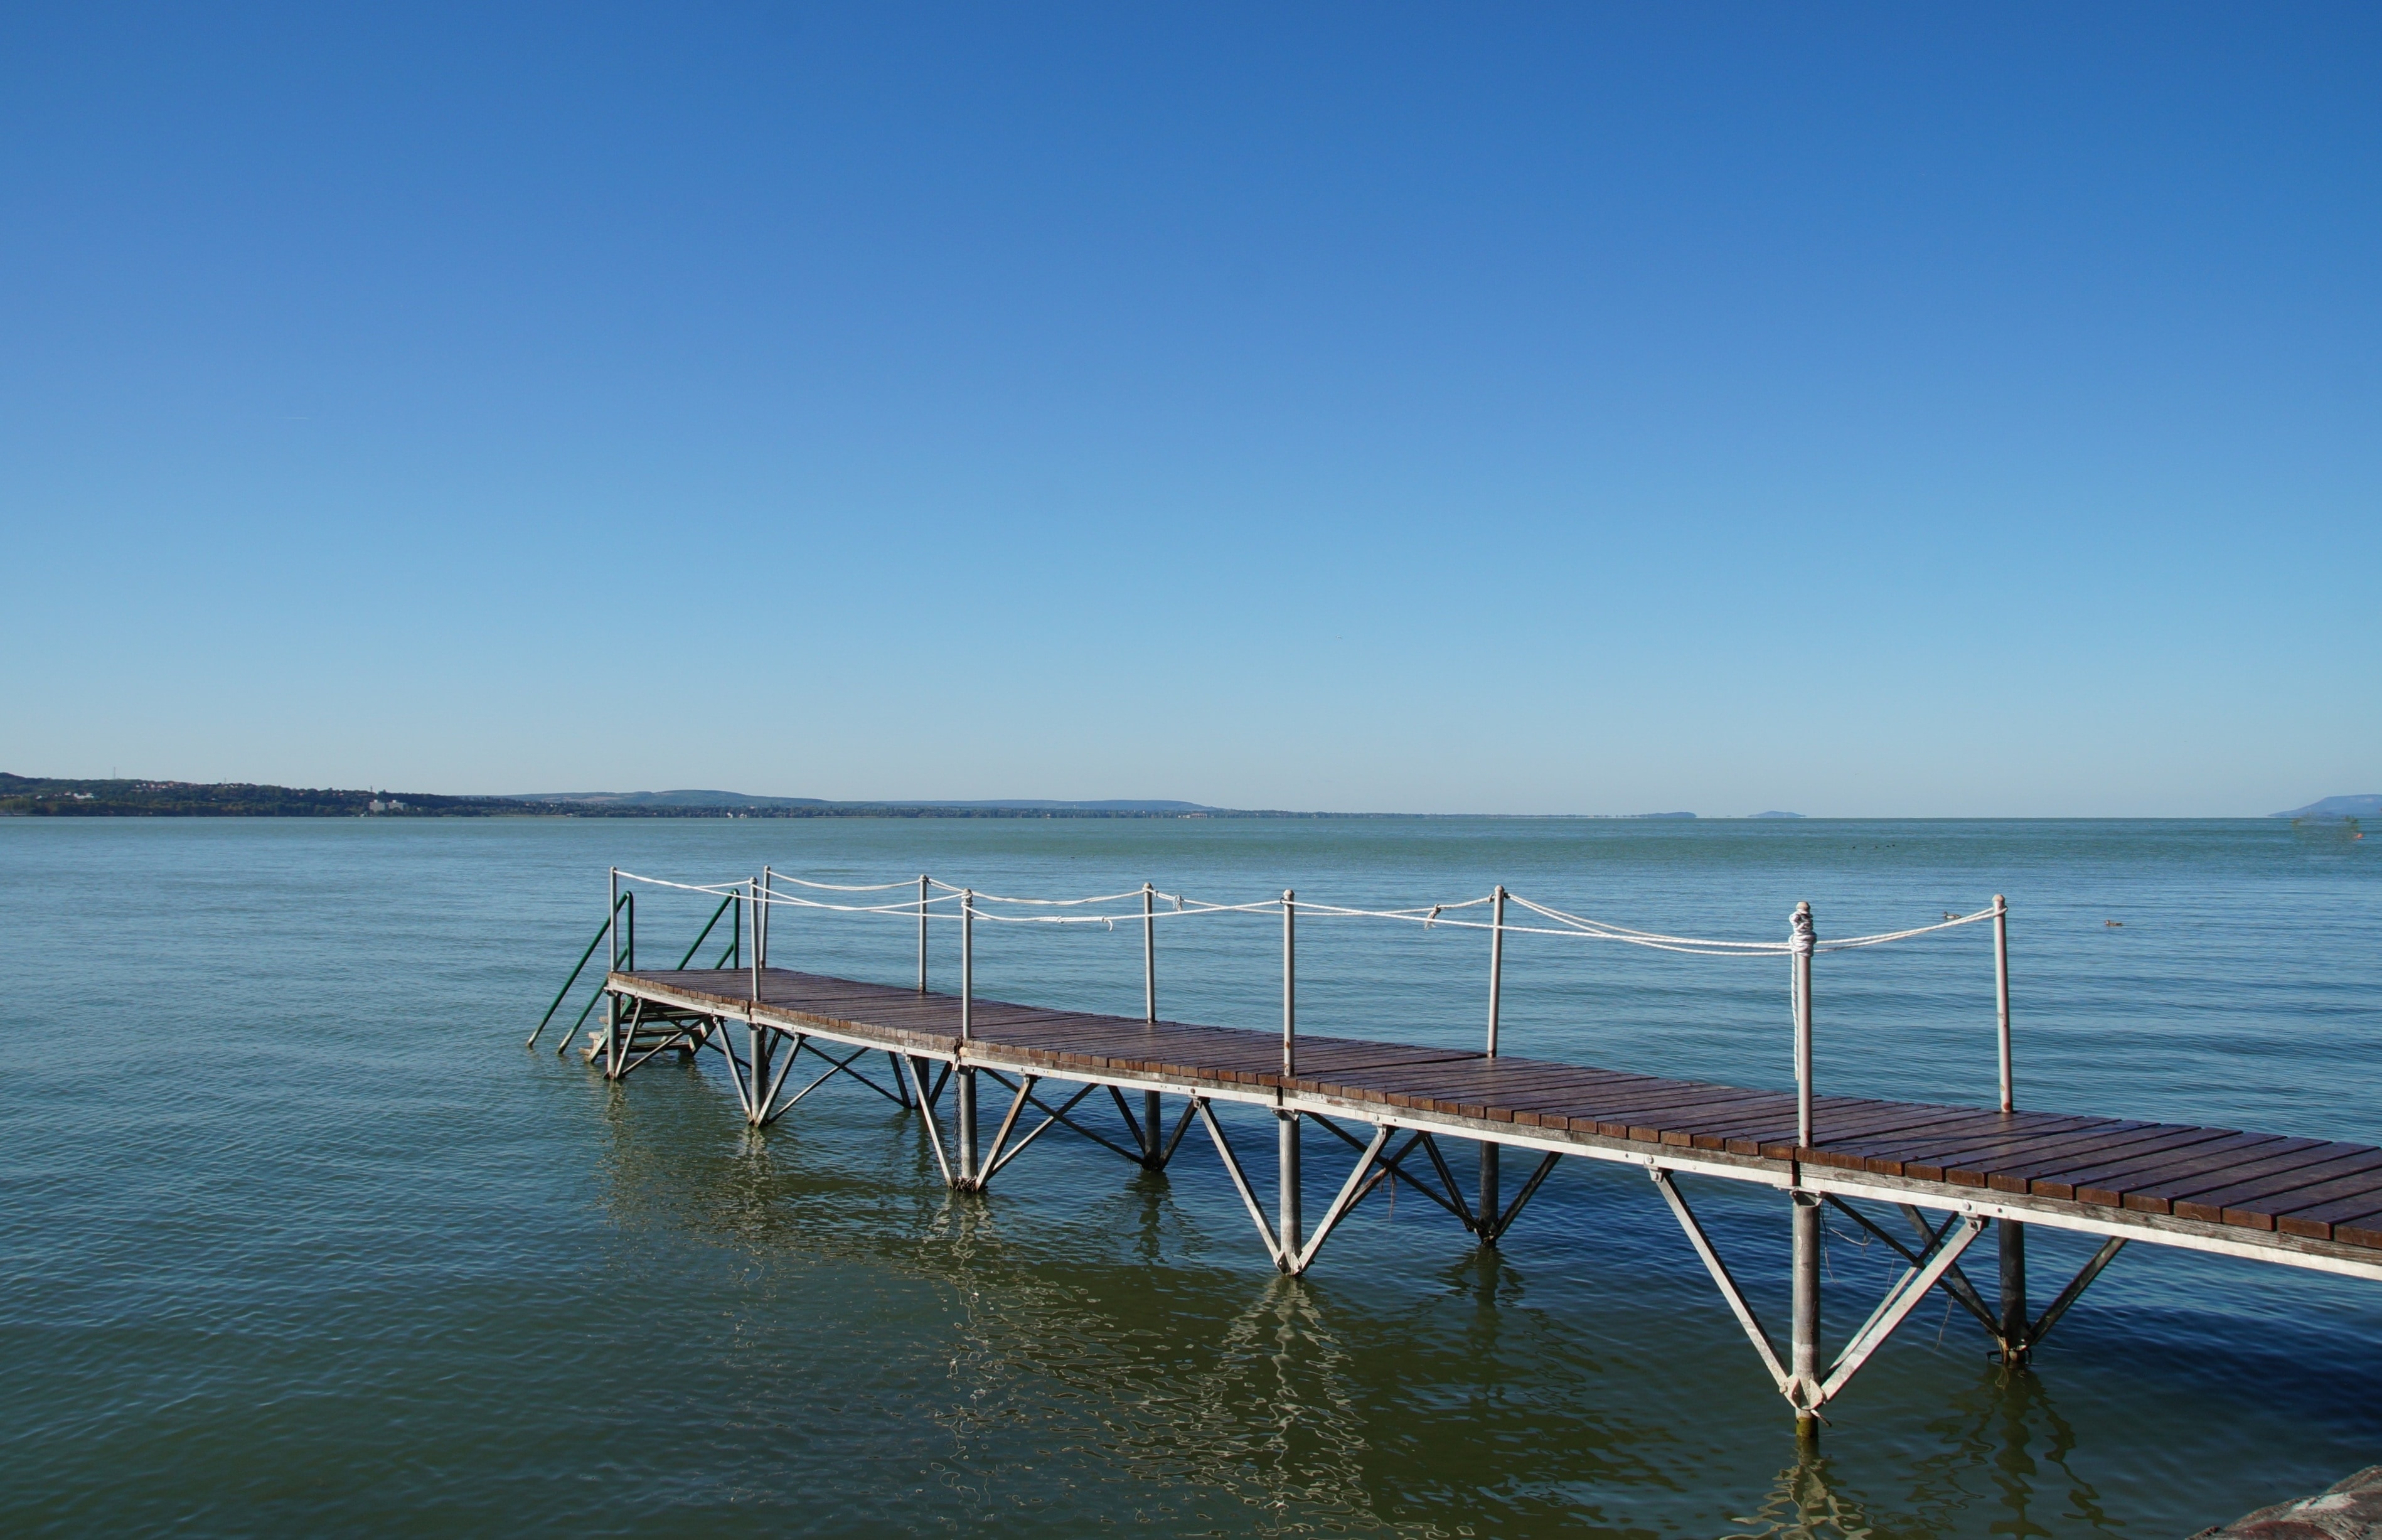 brown wooden boardwalk on calm body of water under blue calm sky